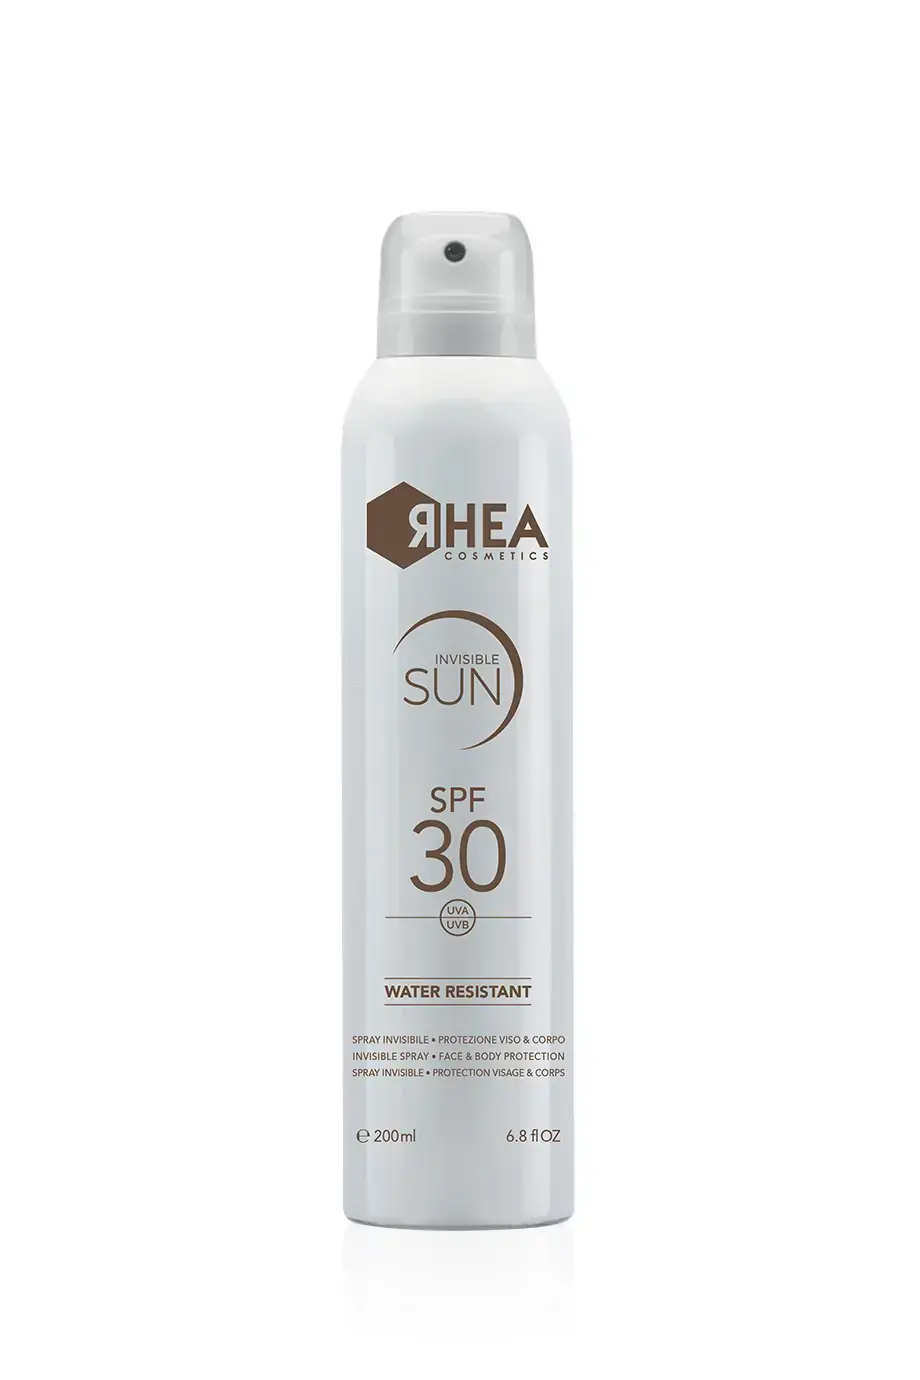 RHEA Cosmetics SPF30 Invisible Sun - Invisible Spray Face& Body Protection SPF30